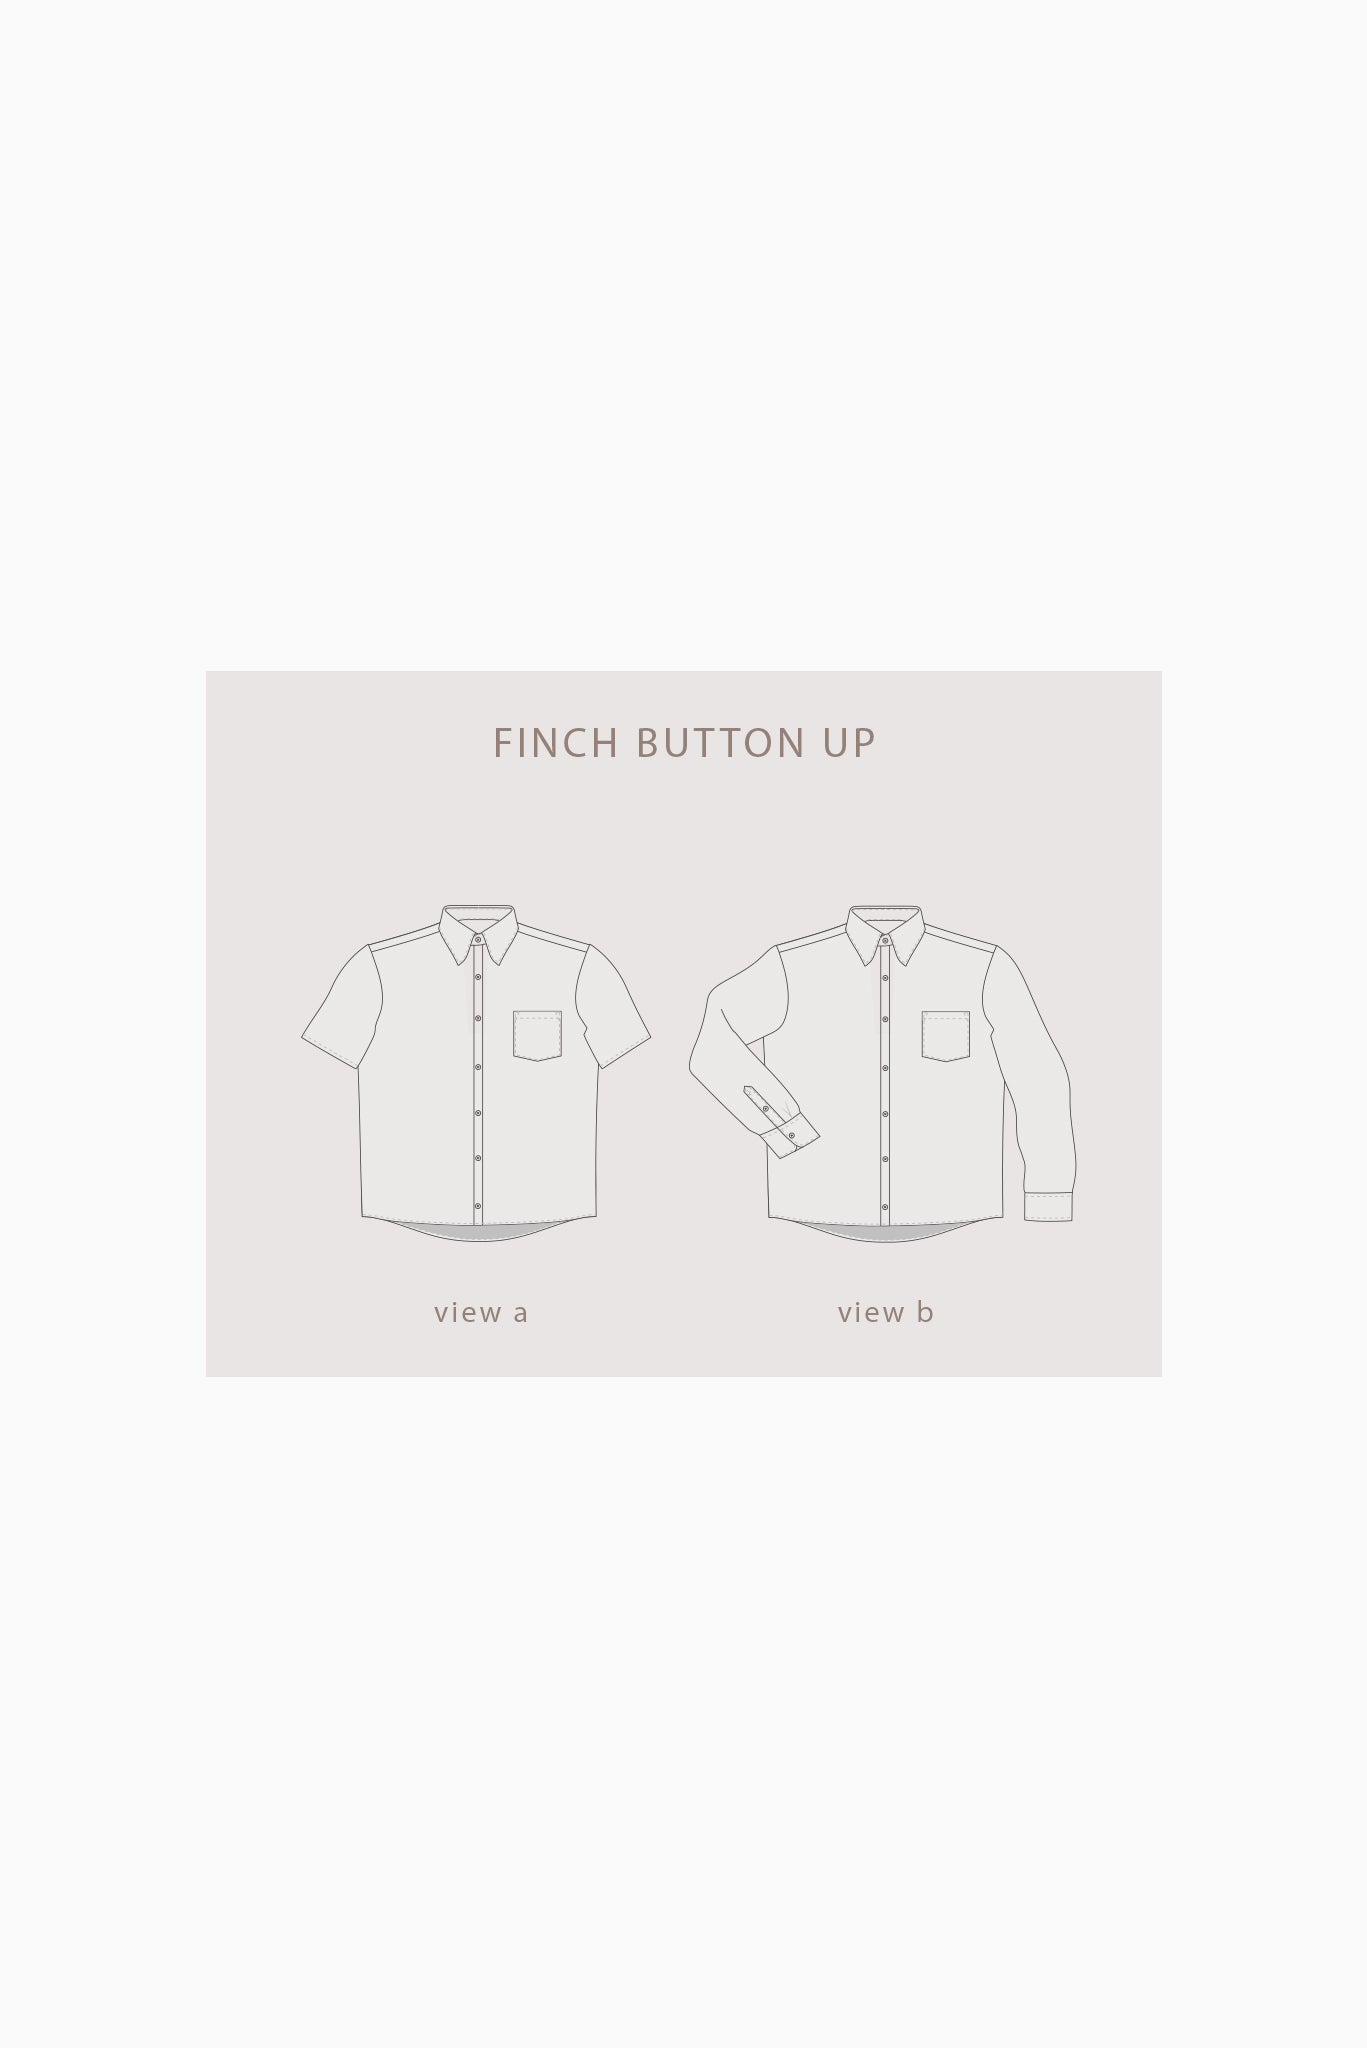 Finch Button Up DIGITAL Pattern